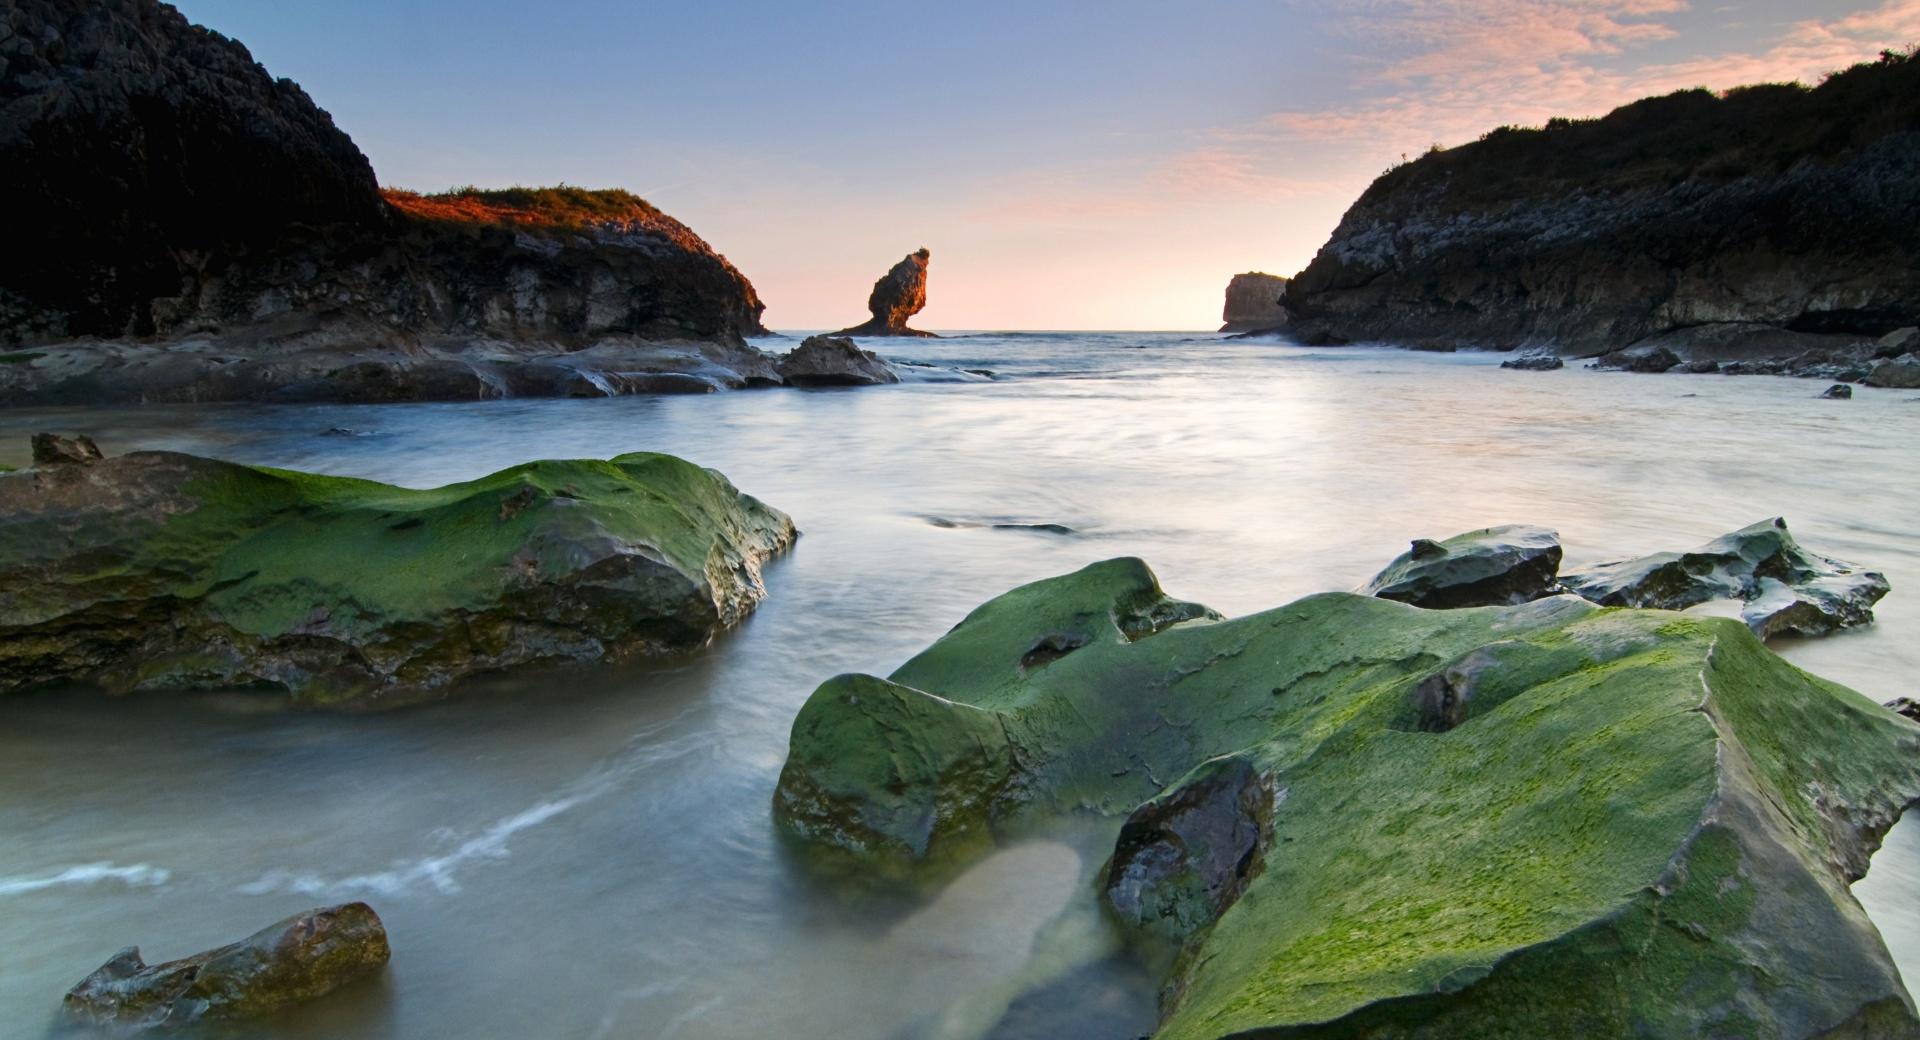 Green Rocks Beach at 1024 x 1024 iPad size wallpapers HD quality